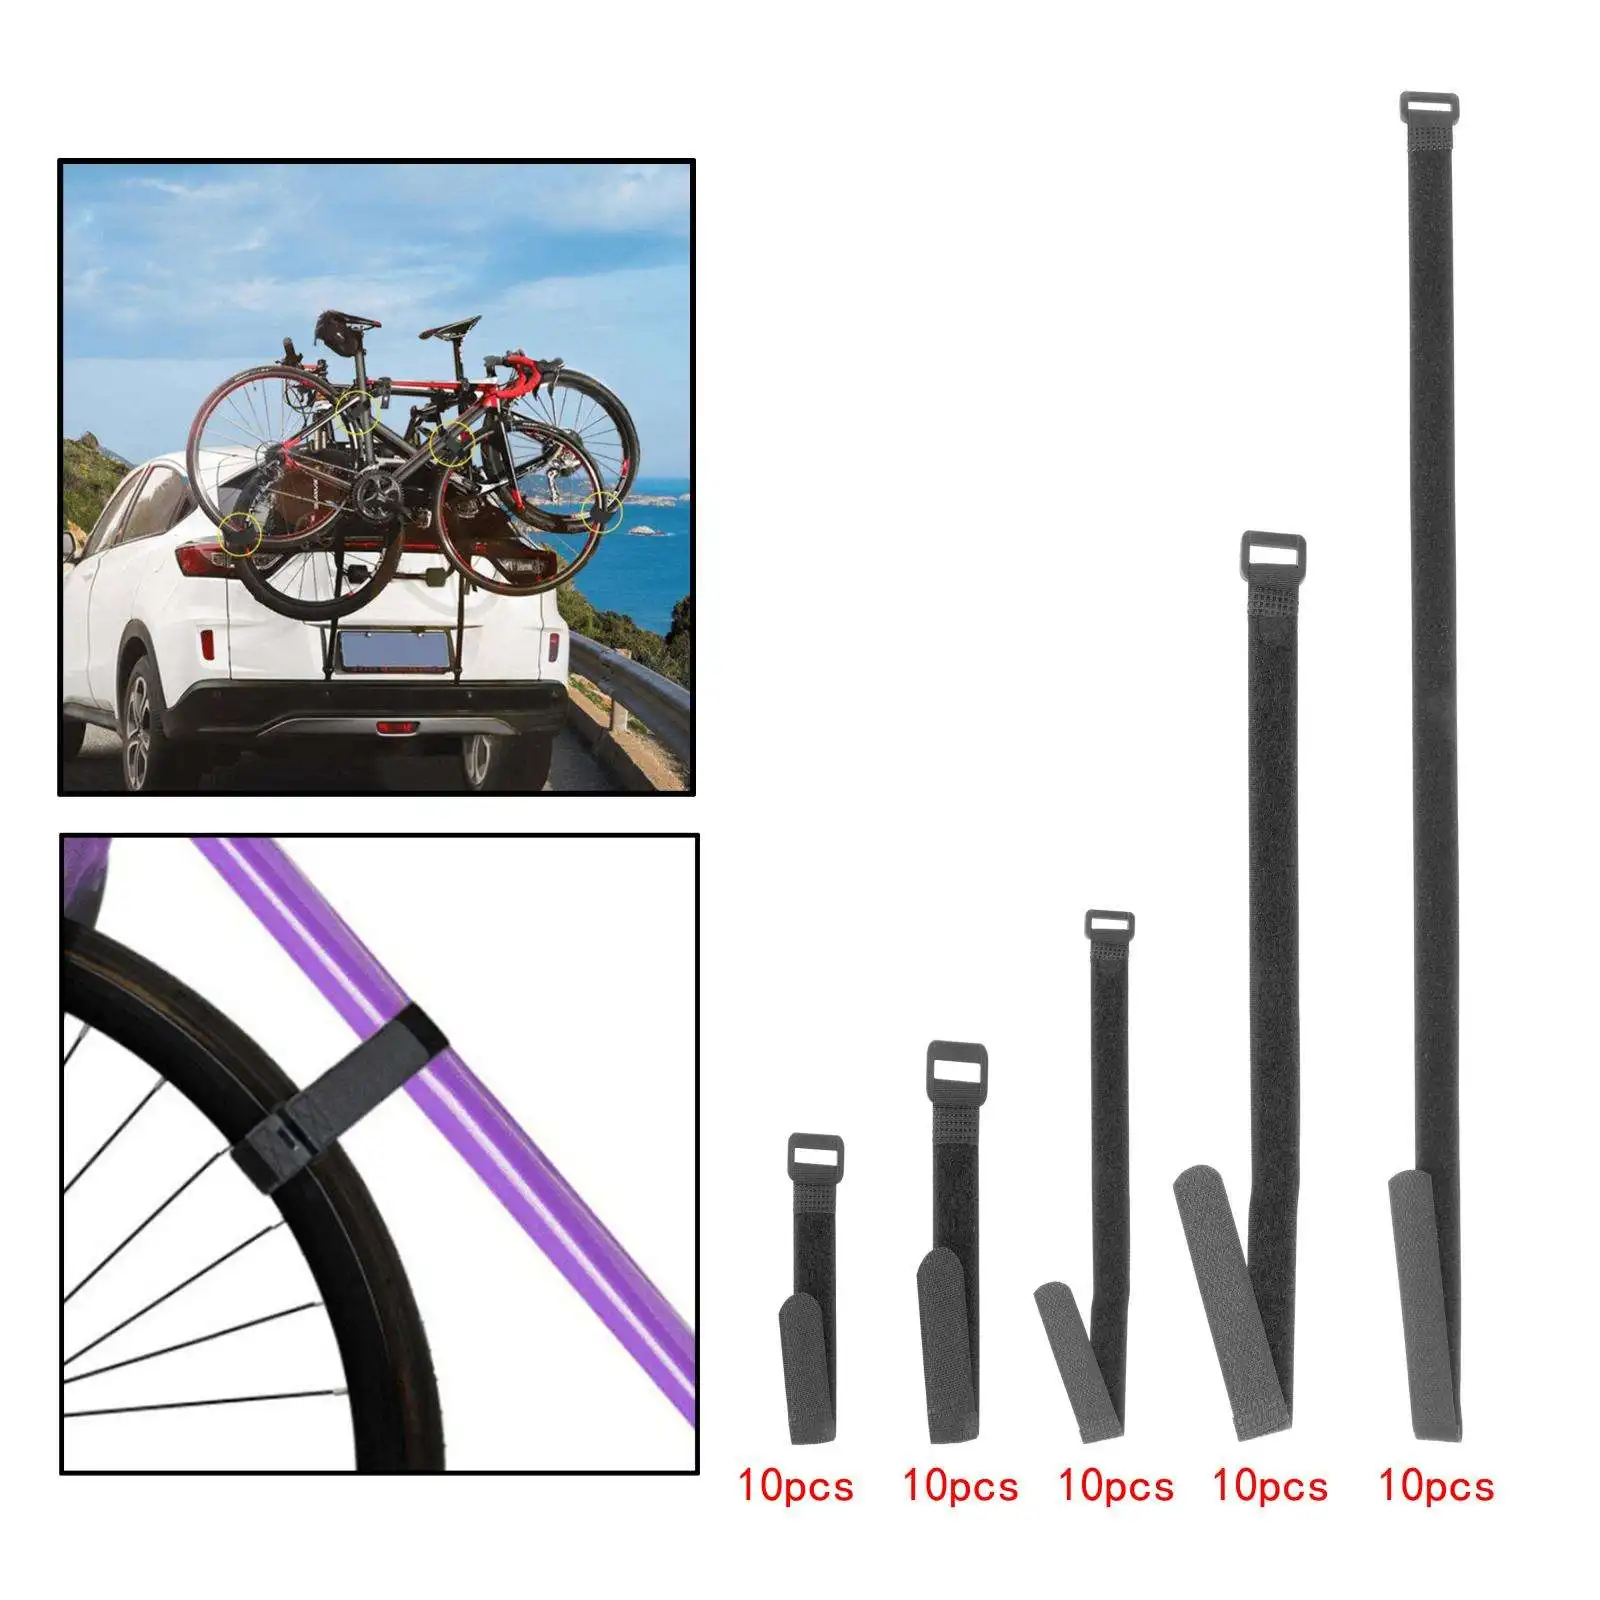 10x Bike Carrier Rack Strap Tie Down Bicycle Wheel Stabilizer Straps Hook 